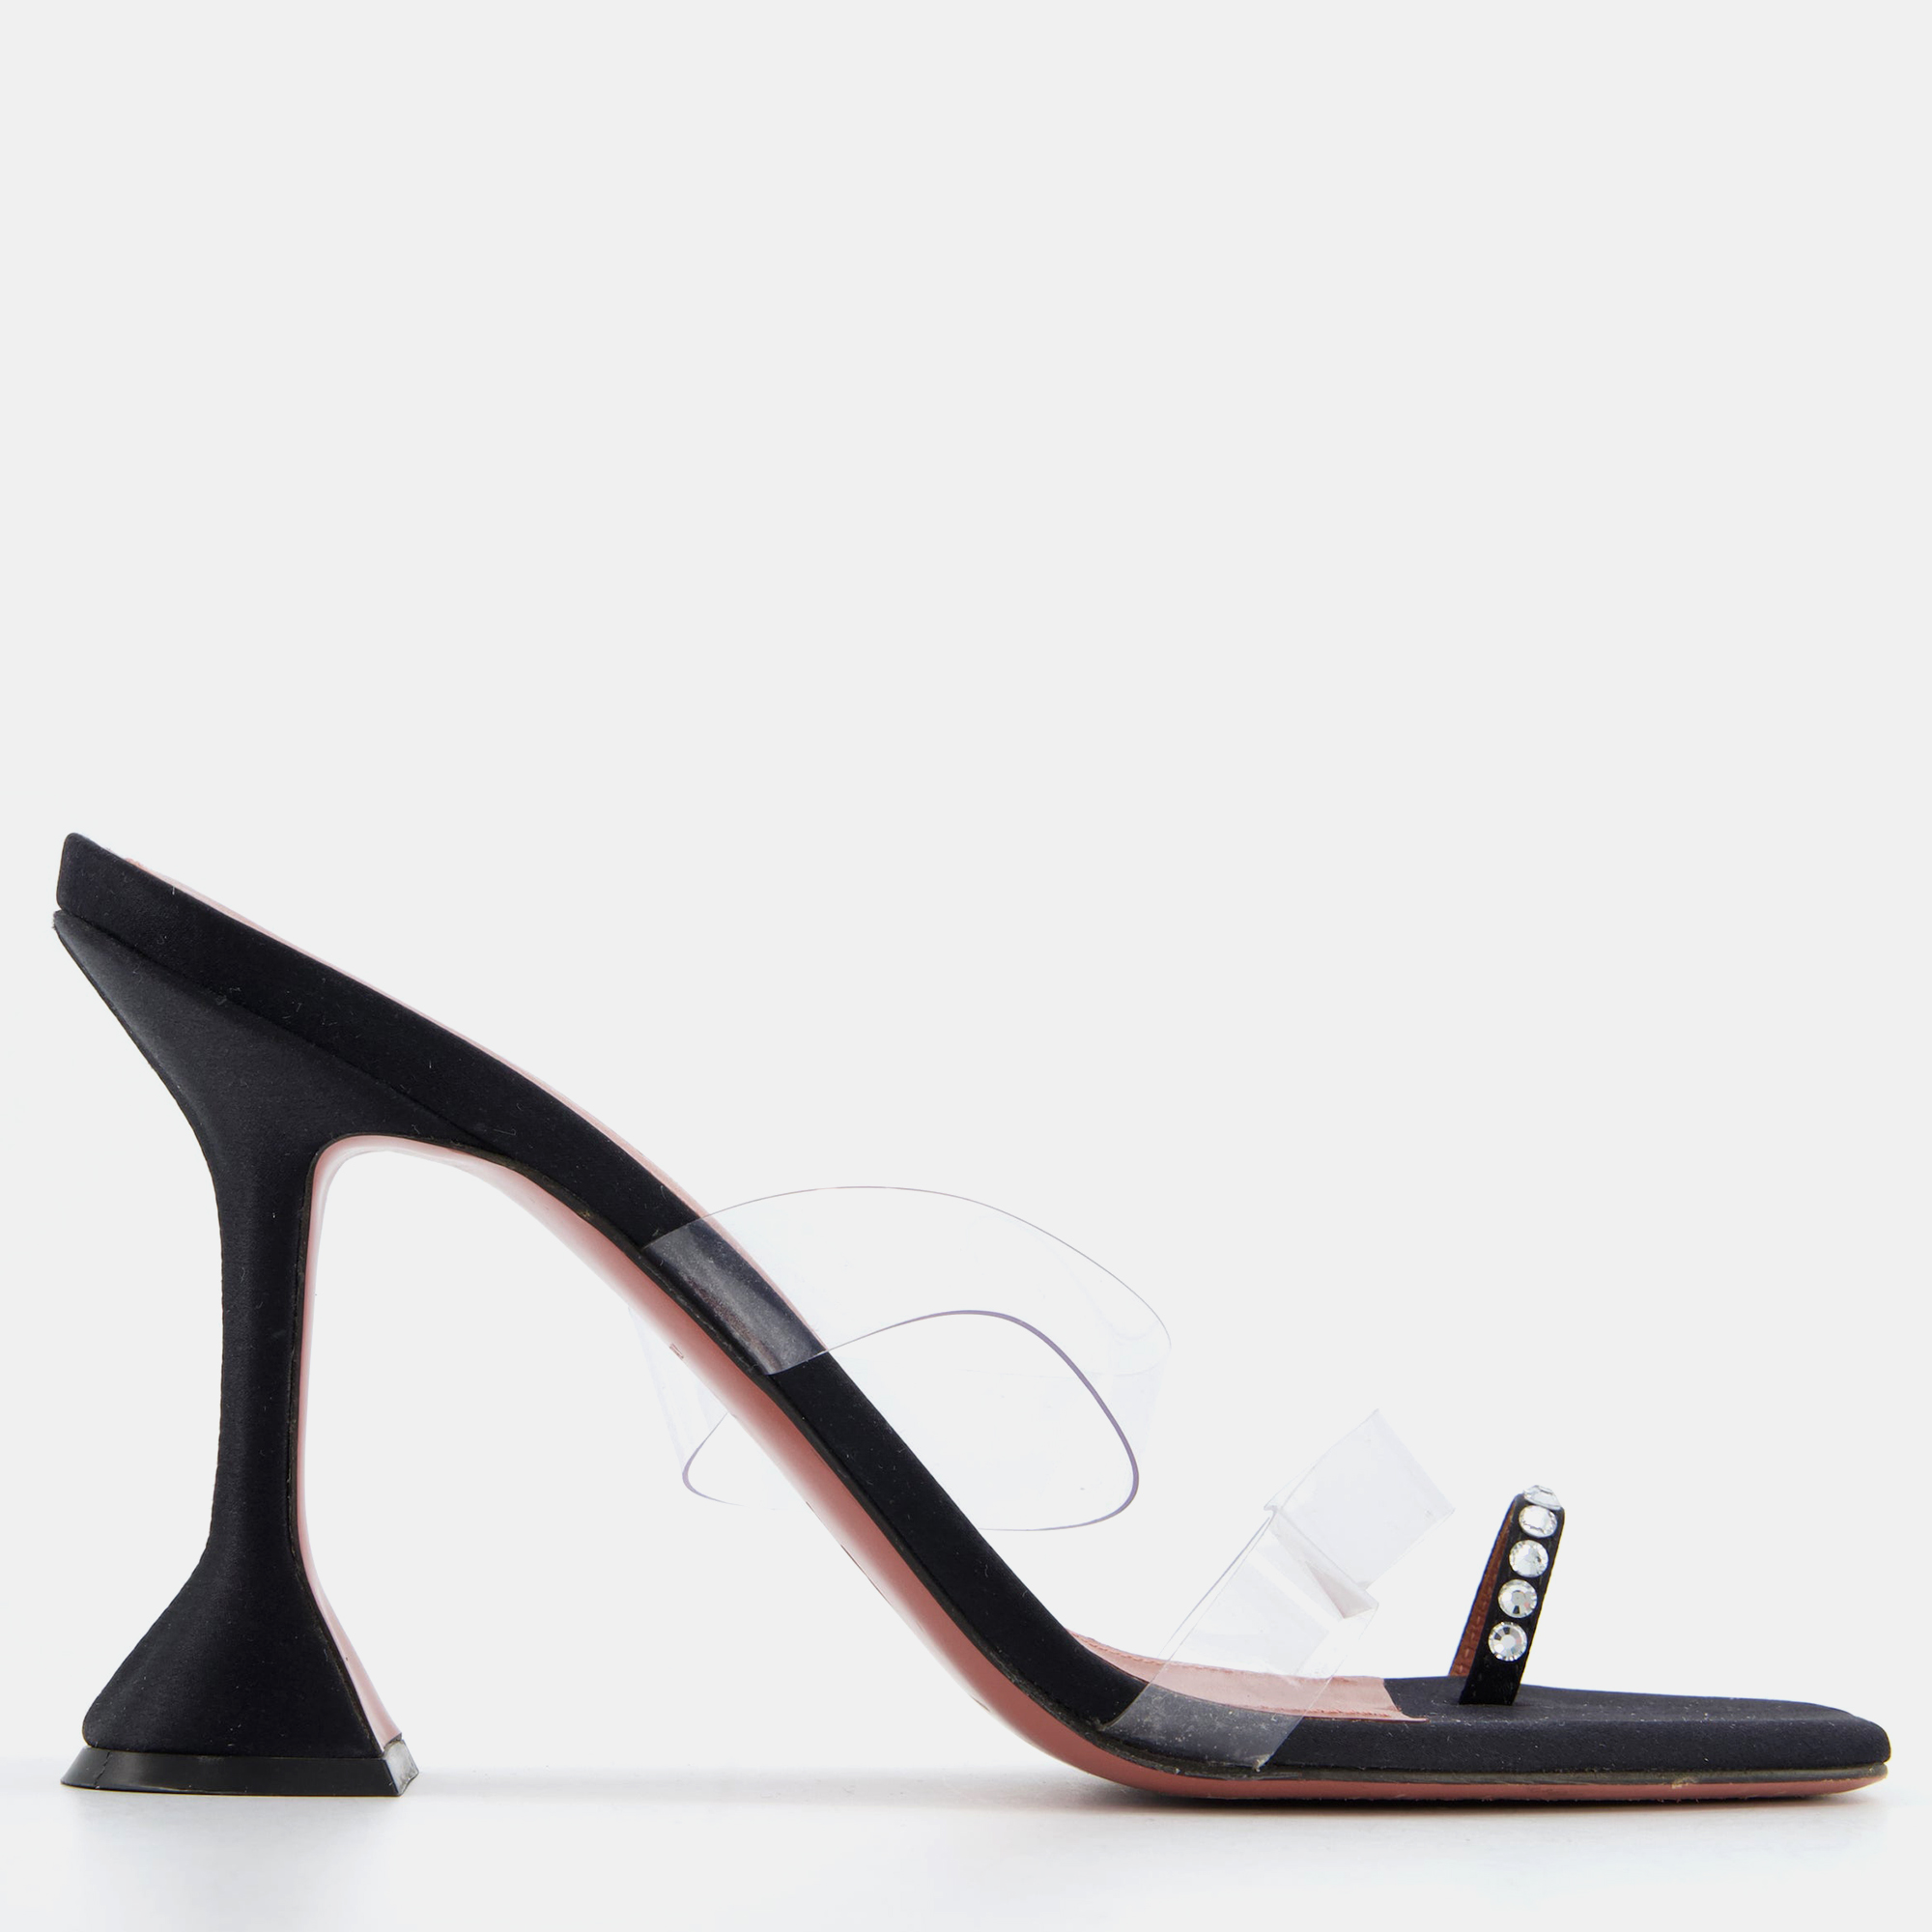 Amina muaddi black satin heels with perspex strap and crystal detail size eu 40